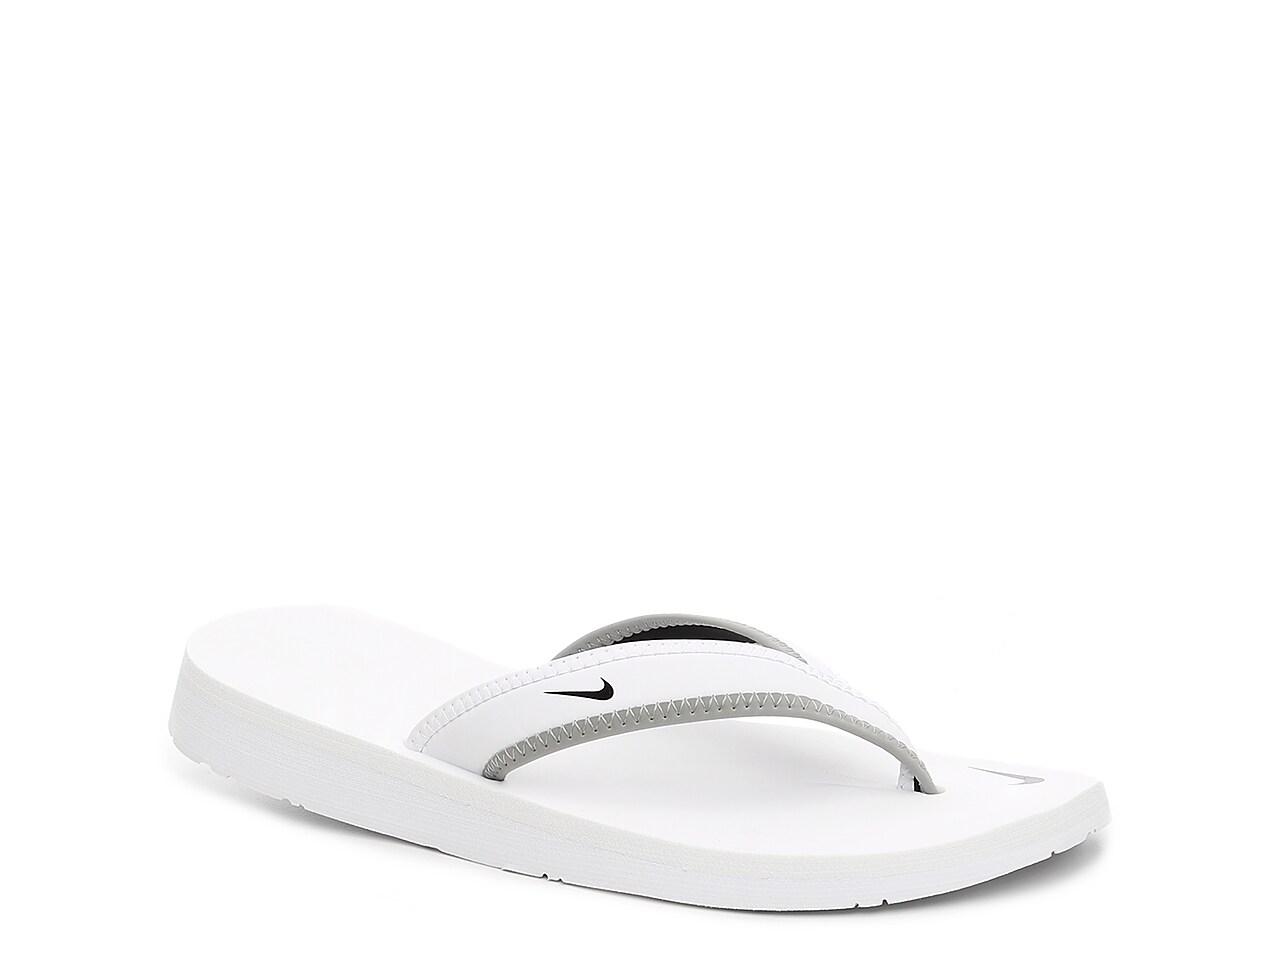 Nike Celso Girl Flip Flop in White